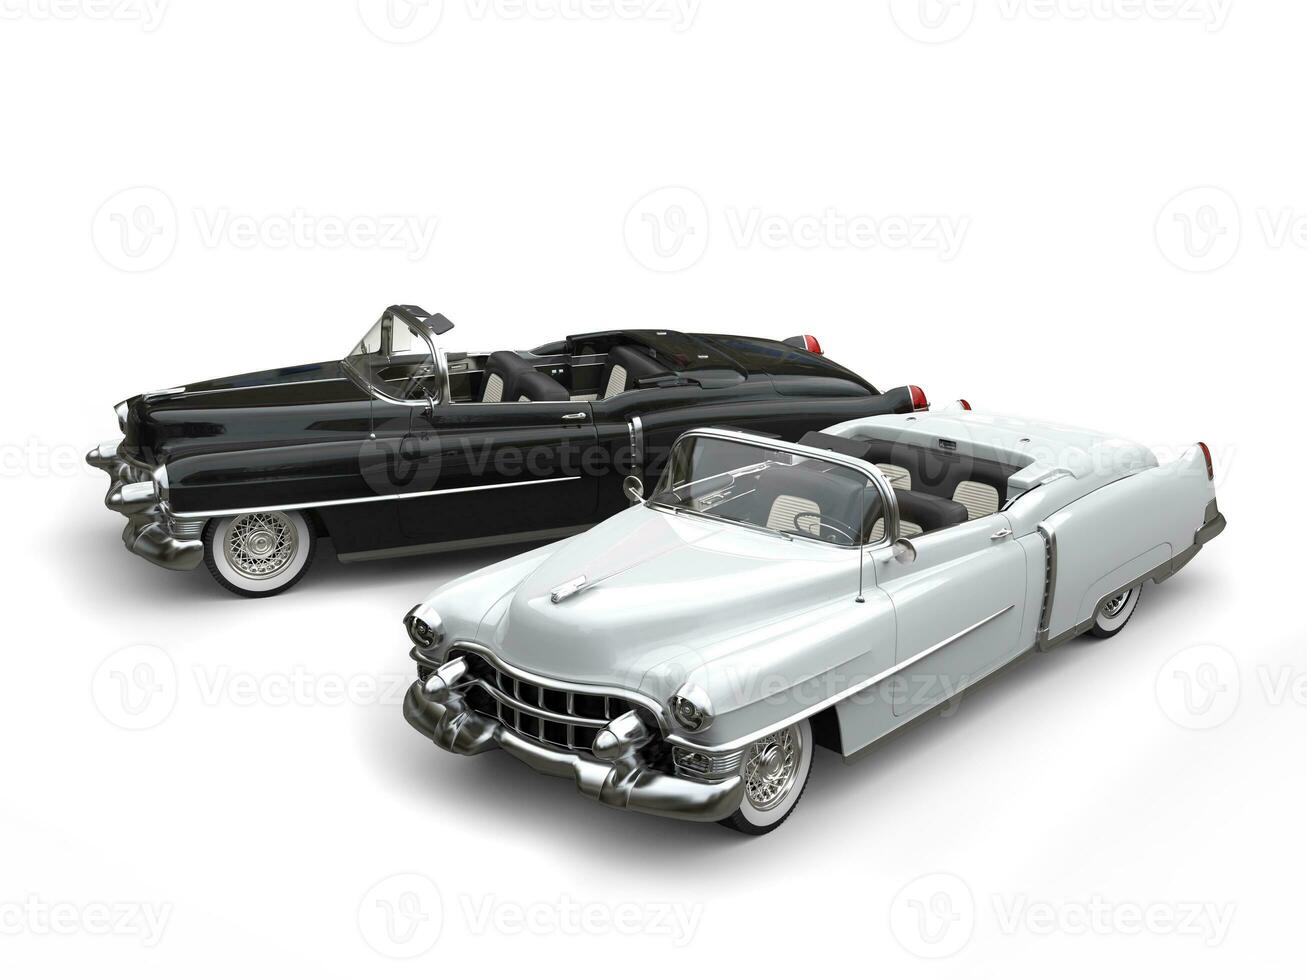 dois impressionante Preto e branco vintage carros - topo Visão foto